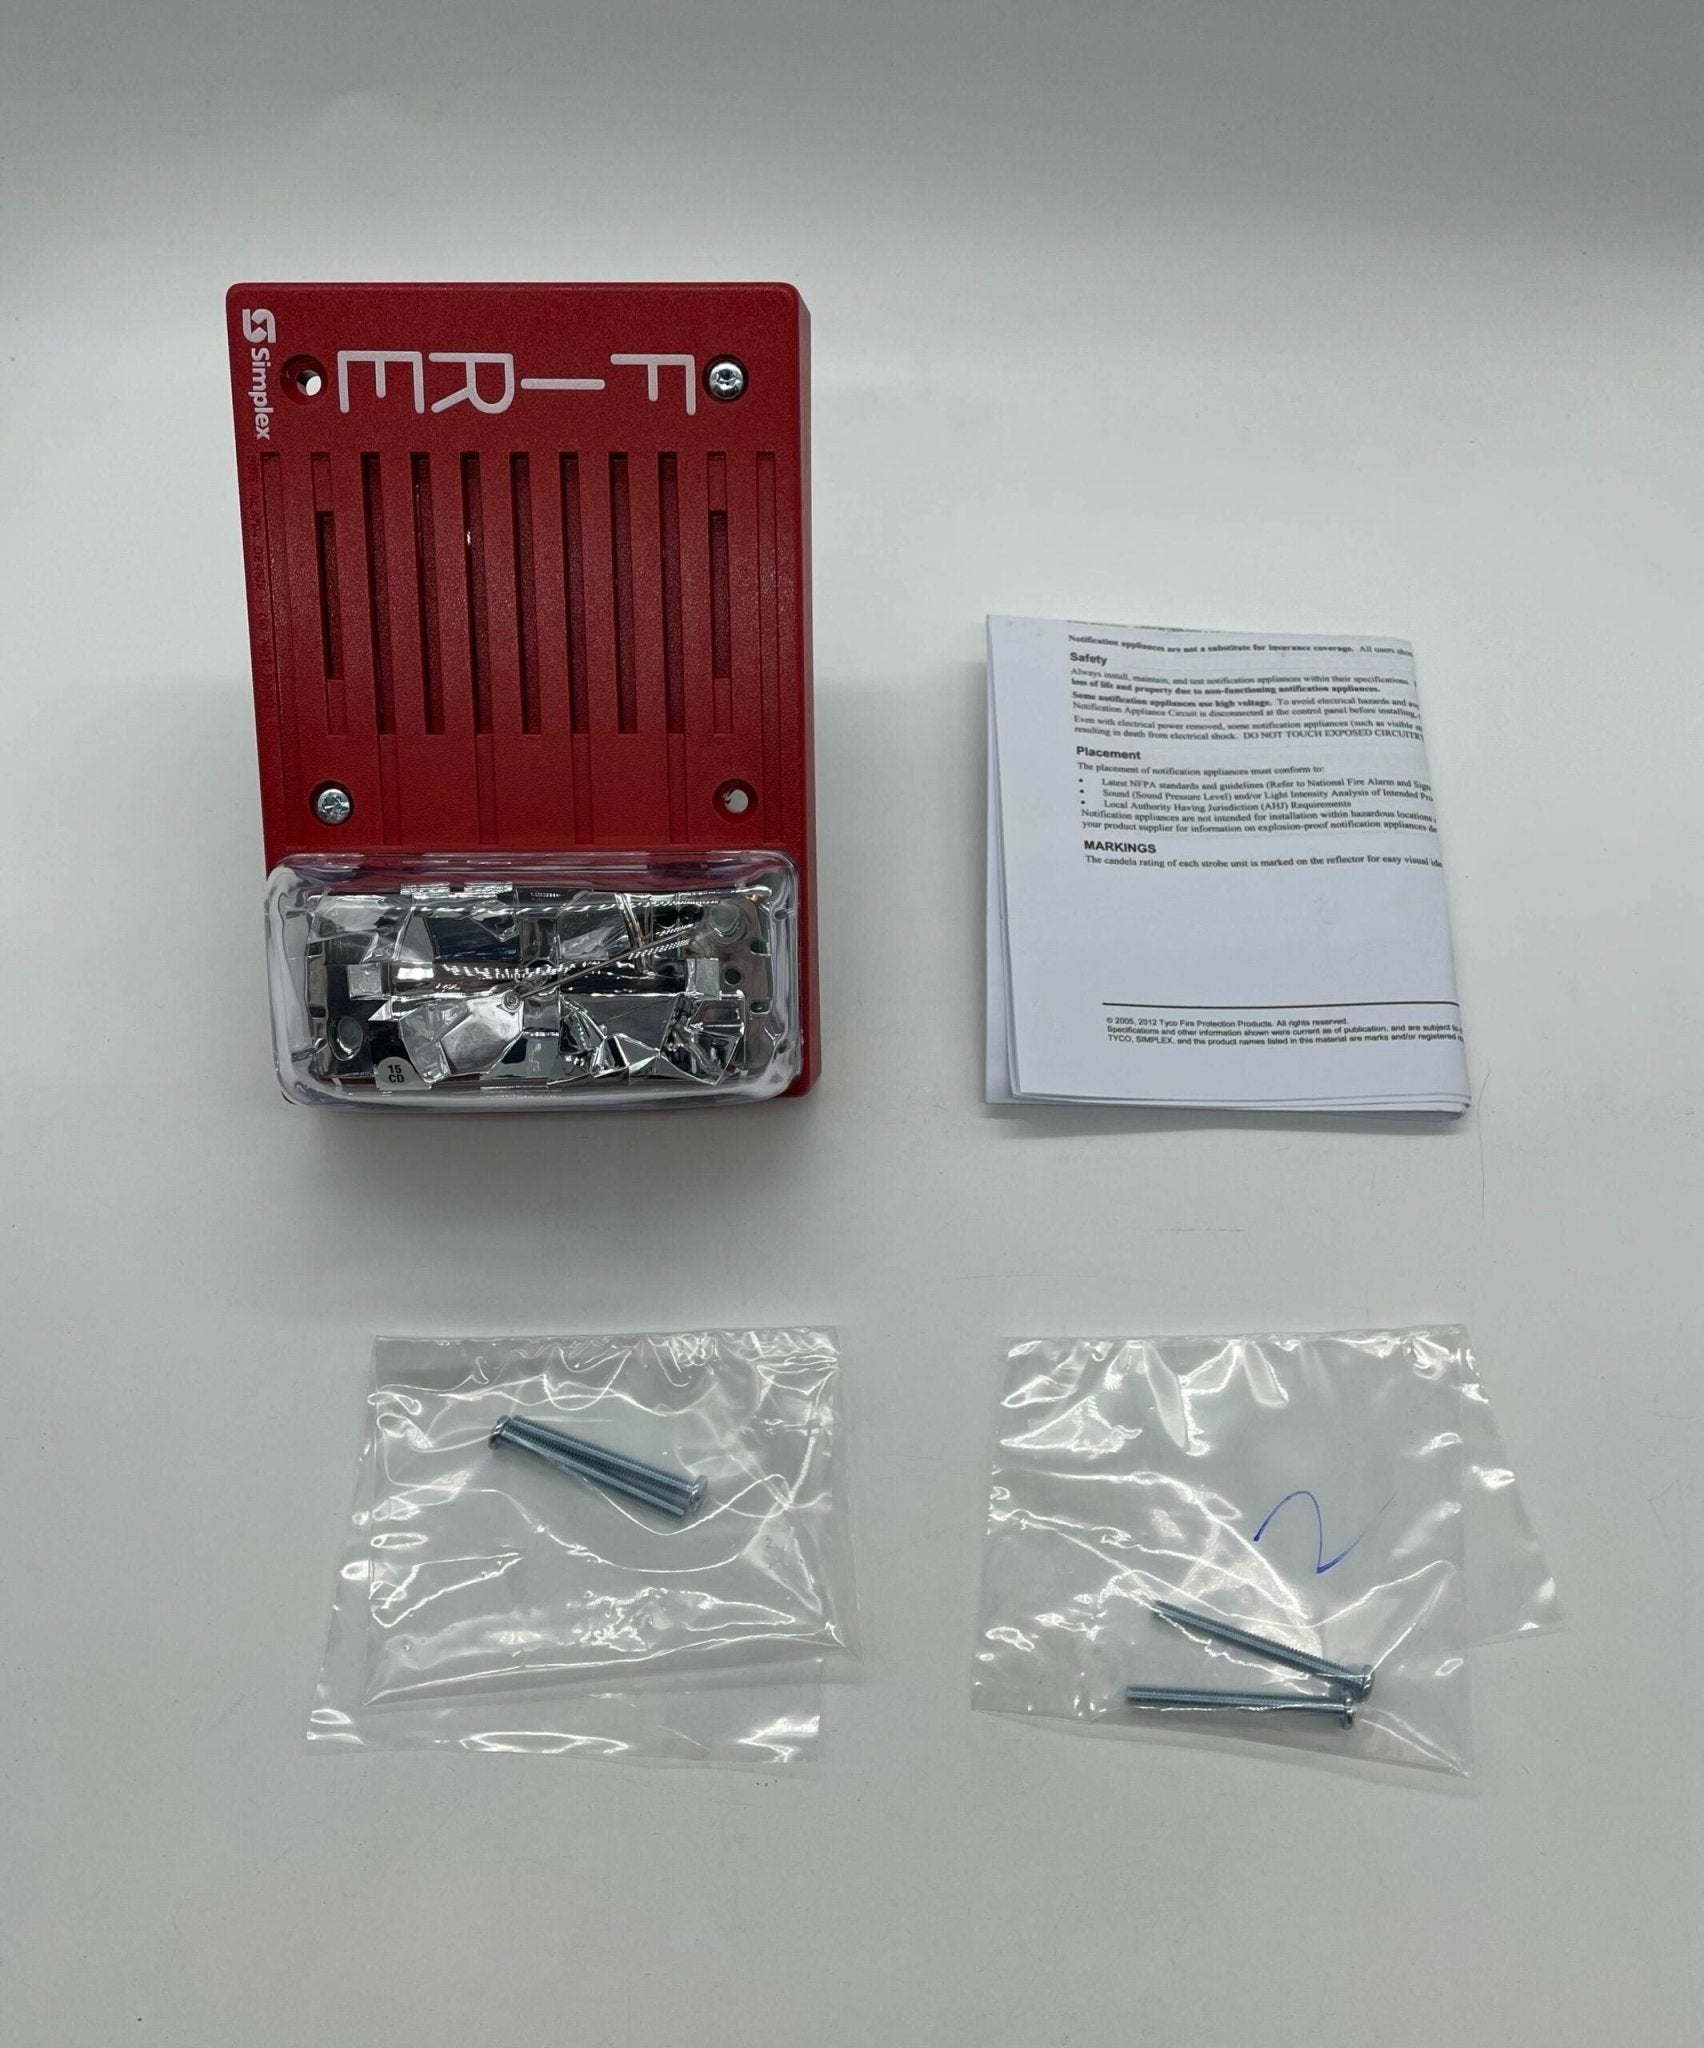 Simplex 4903-9150 Red Horizontal Strobe - The Fire Alarm Supplier